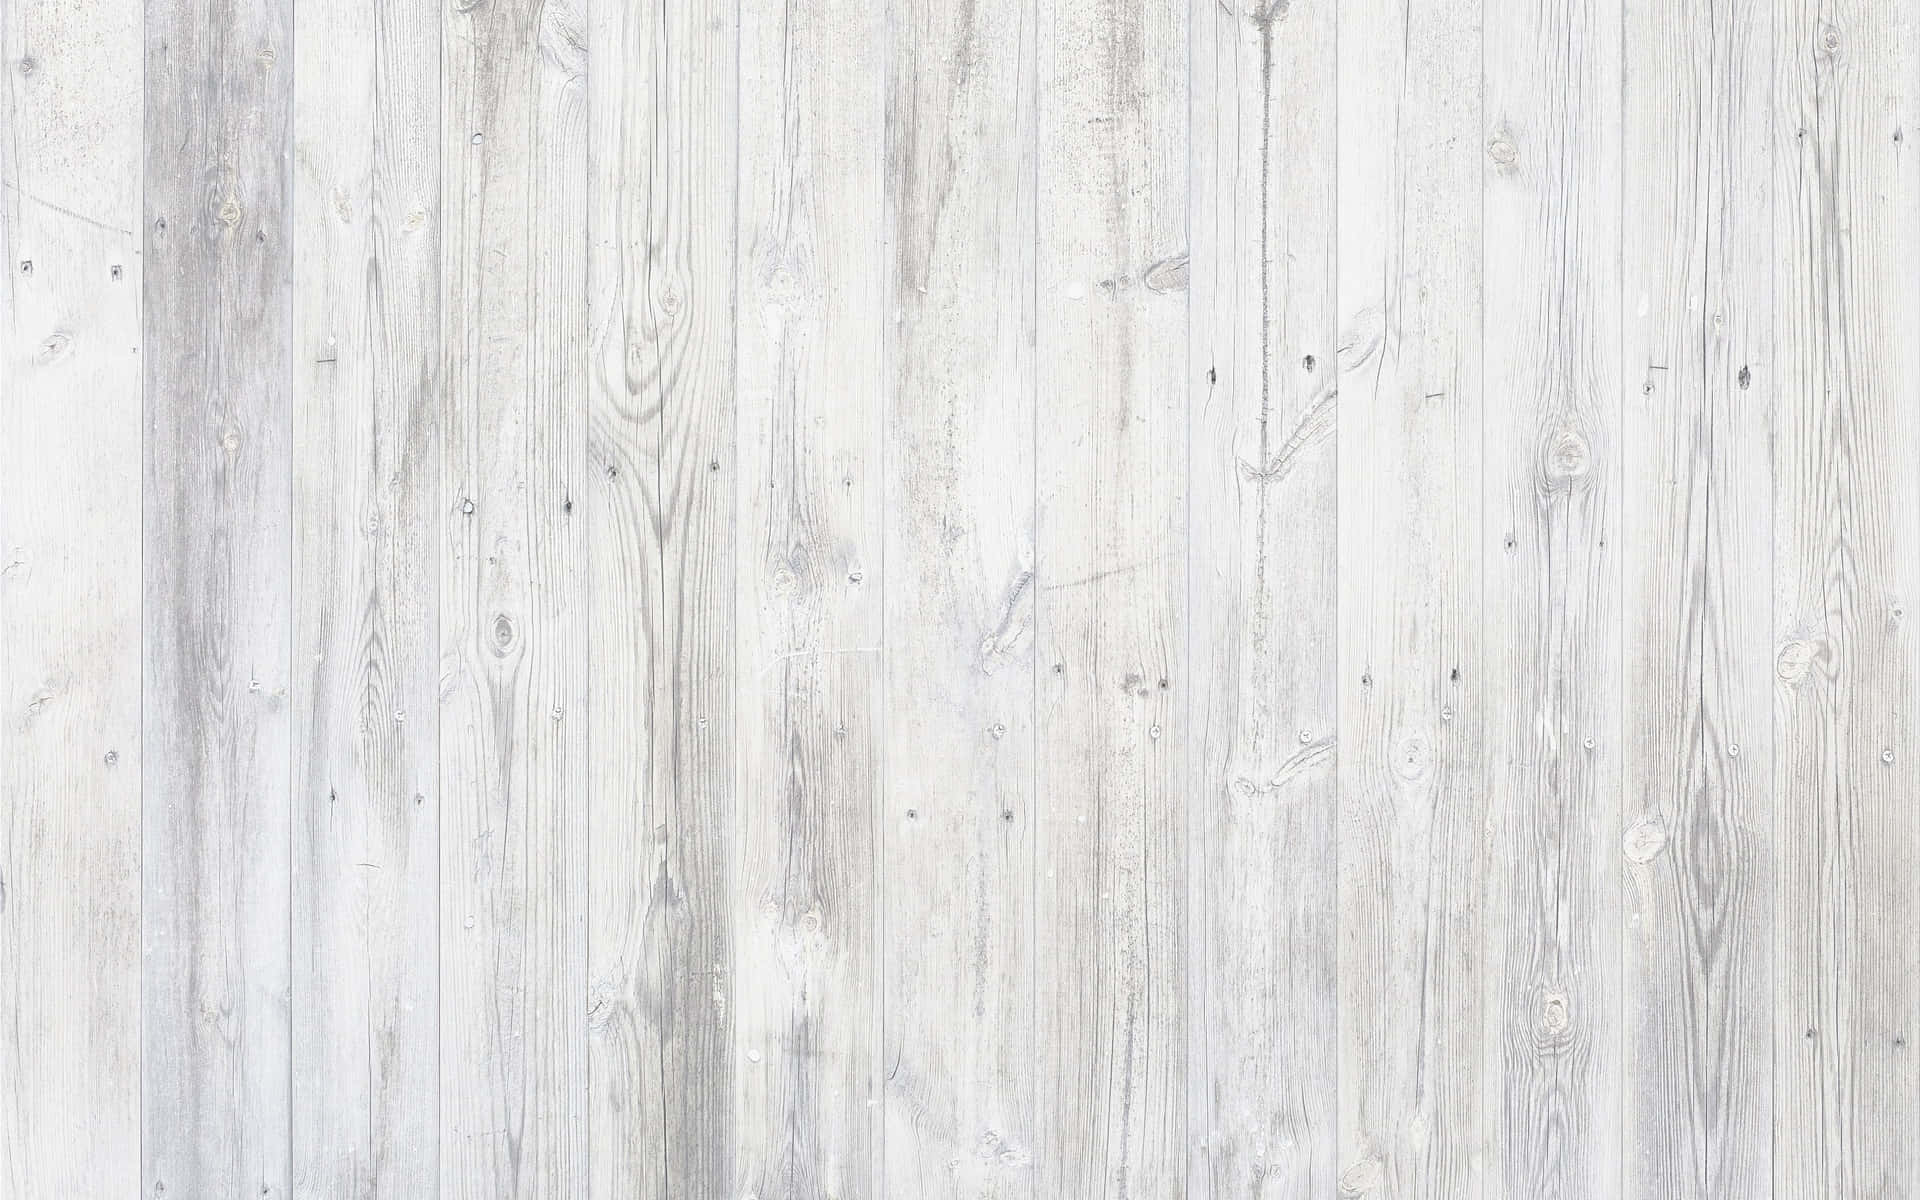 Wooden Floor Board White Texture Background